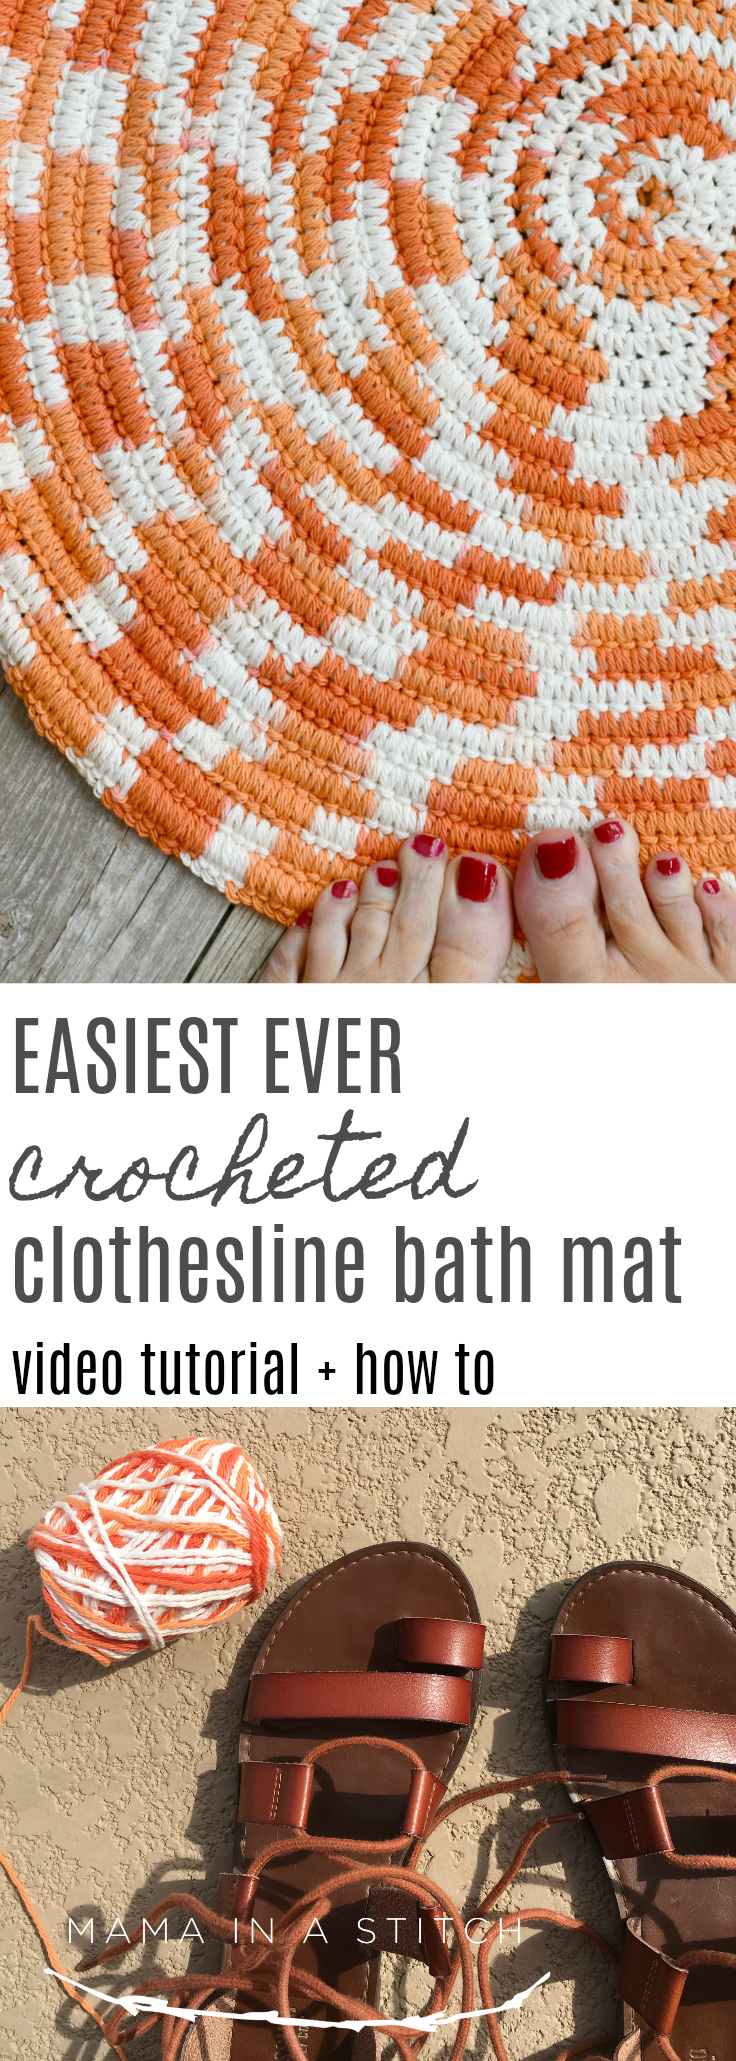 https://www.mamainastitch.com/wp-content/uploads/2019/04/How-To-Crochet-Easy-Bath-Mat-Rug-Beginner.jpg